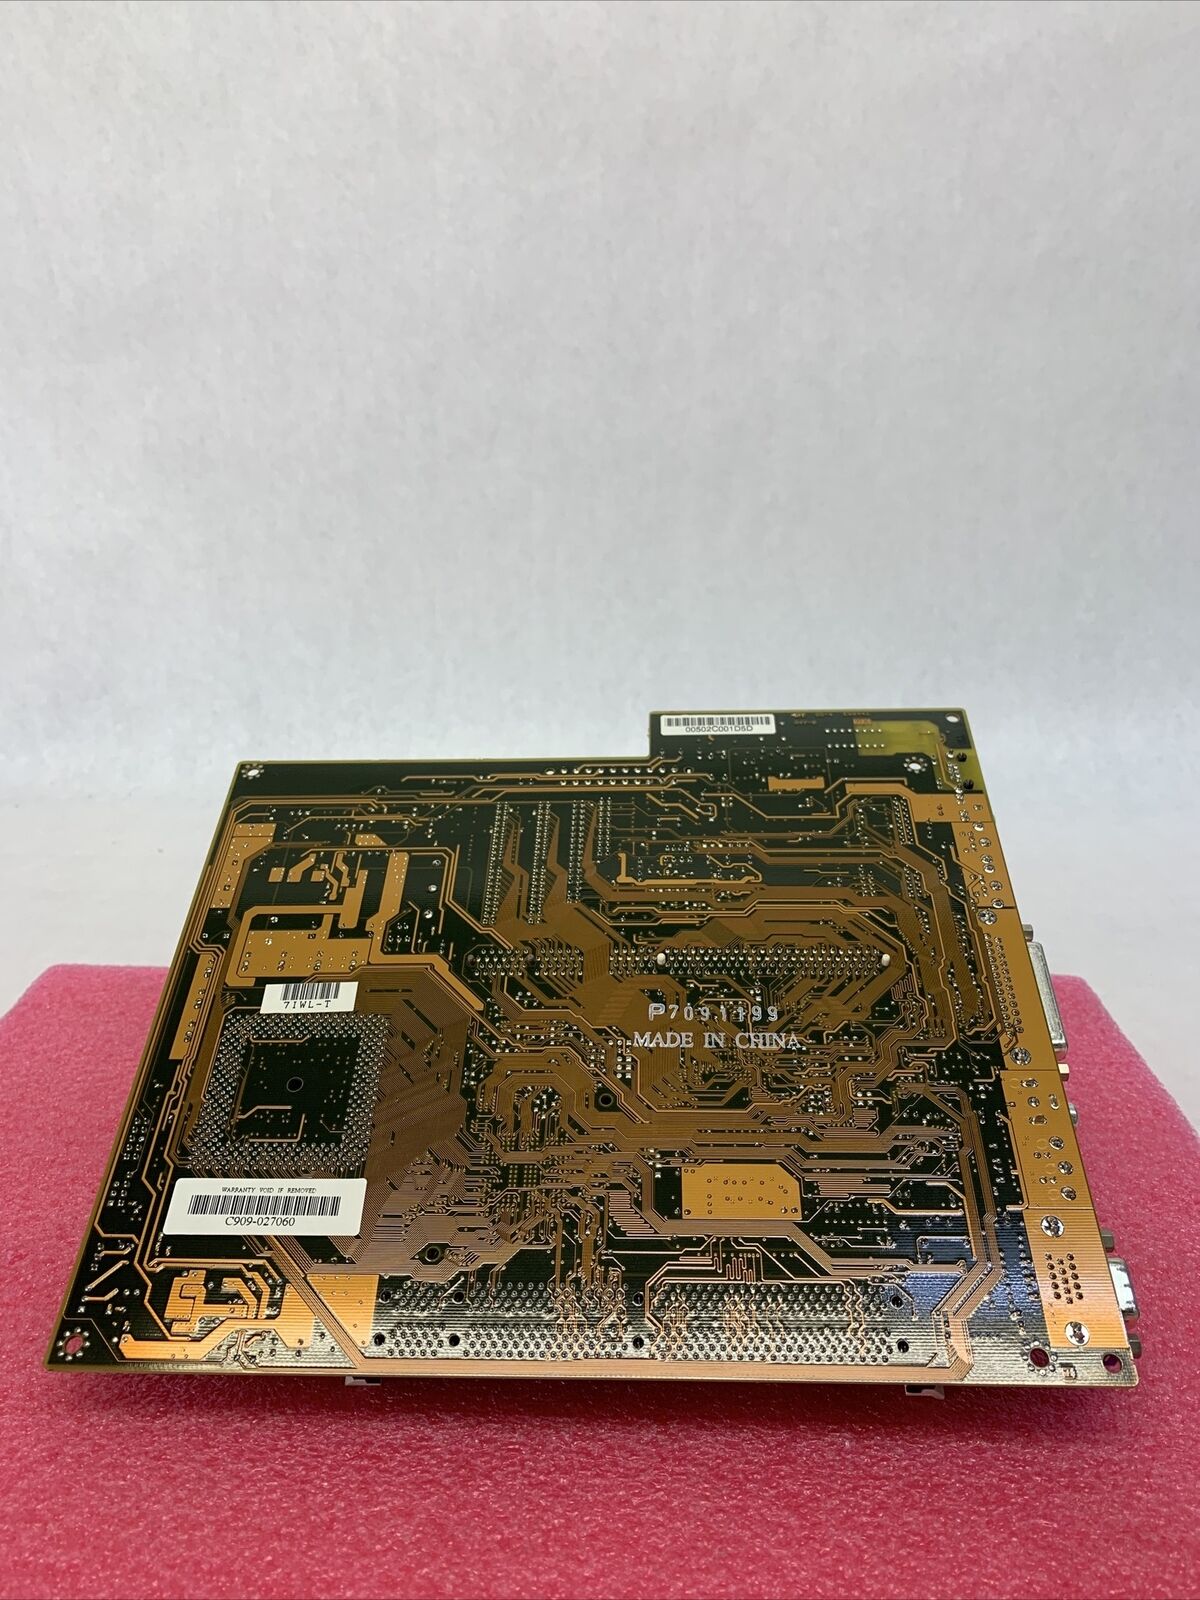 Soyo SY-71WL-T (LI-7000) Motherboard Intel Celeron 400MHz 32MB RAM